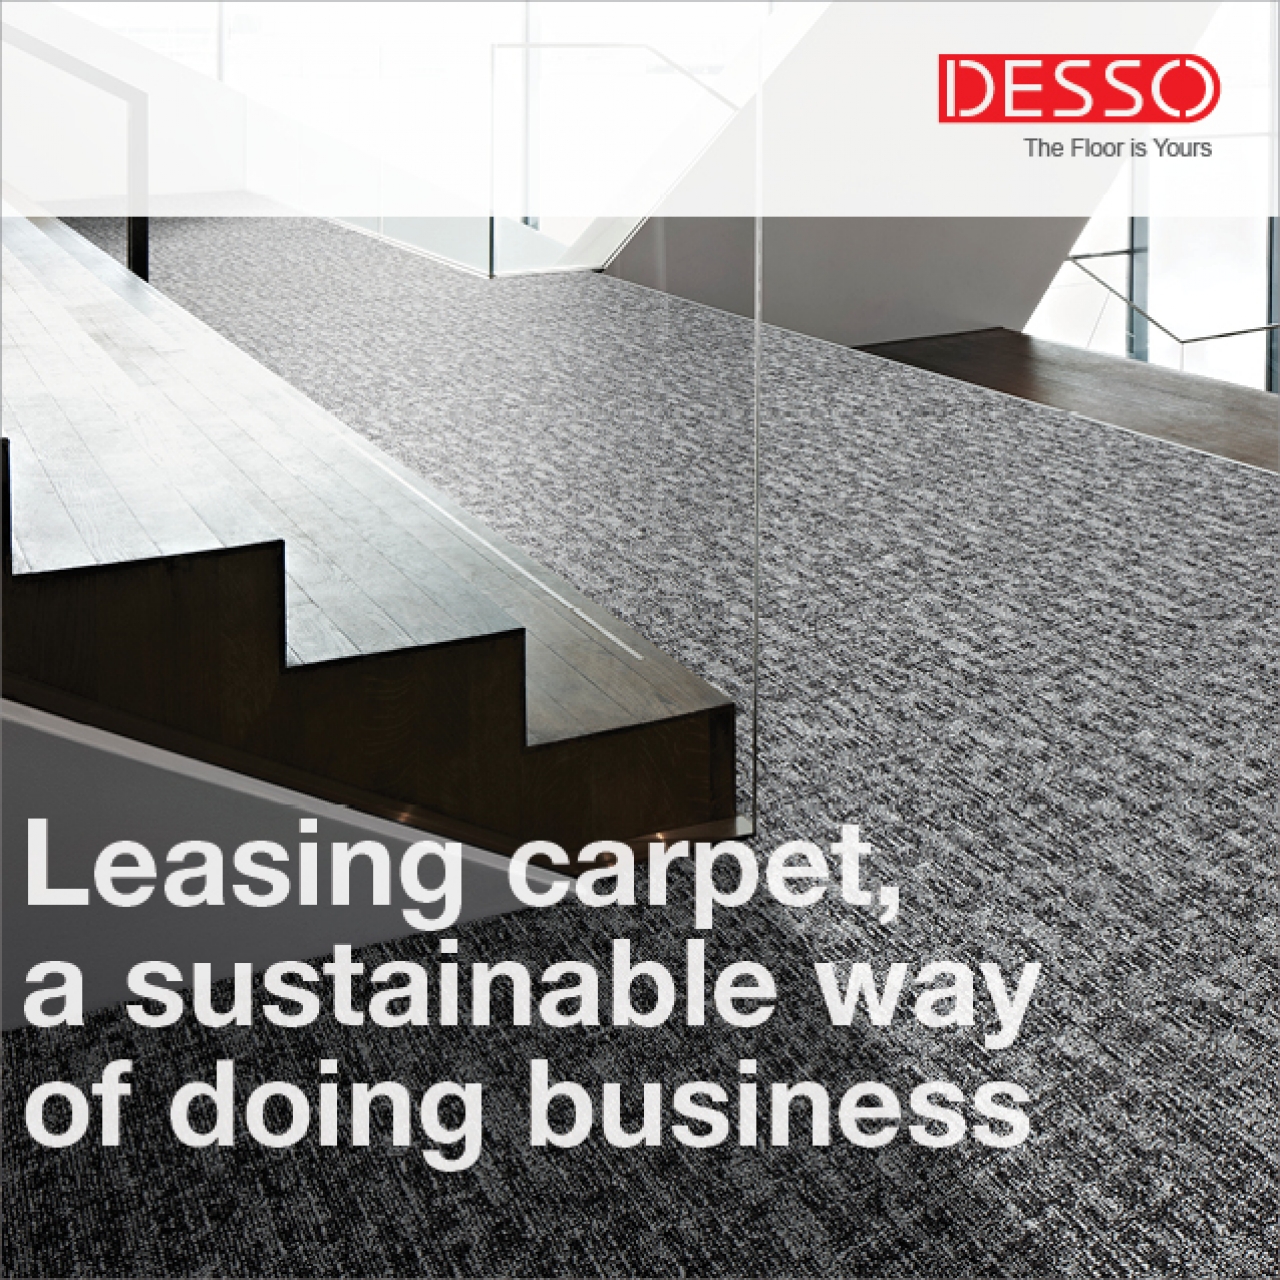 Desso Carpet Lease Sustainable design